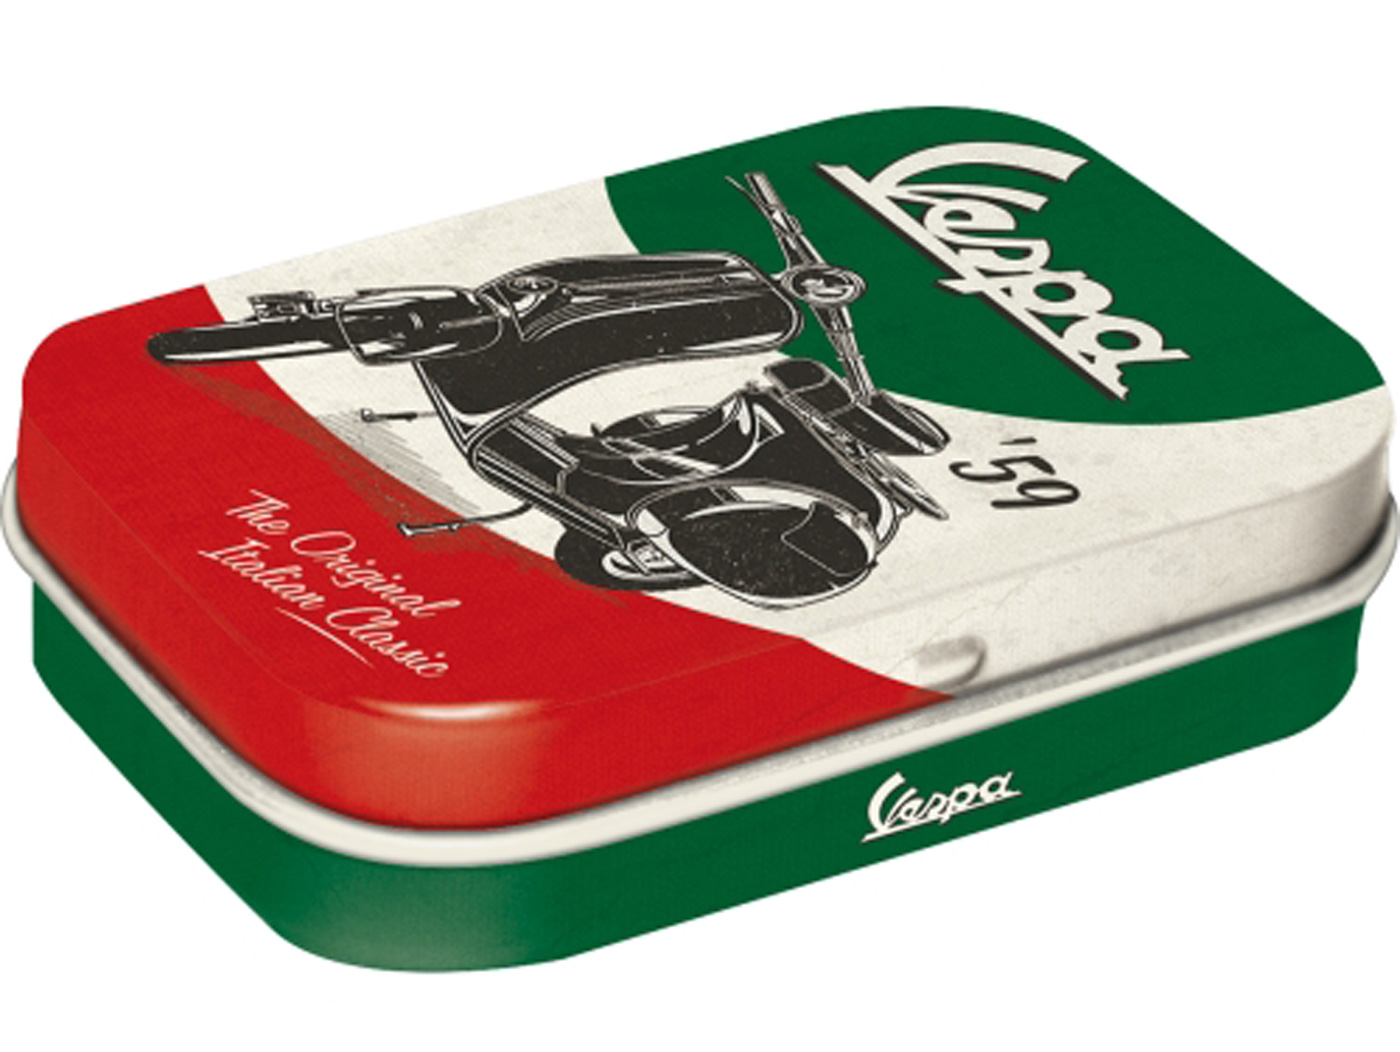 Mint box Vespa "The Original Italian Classic" Perfect for a gift